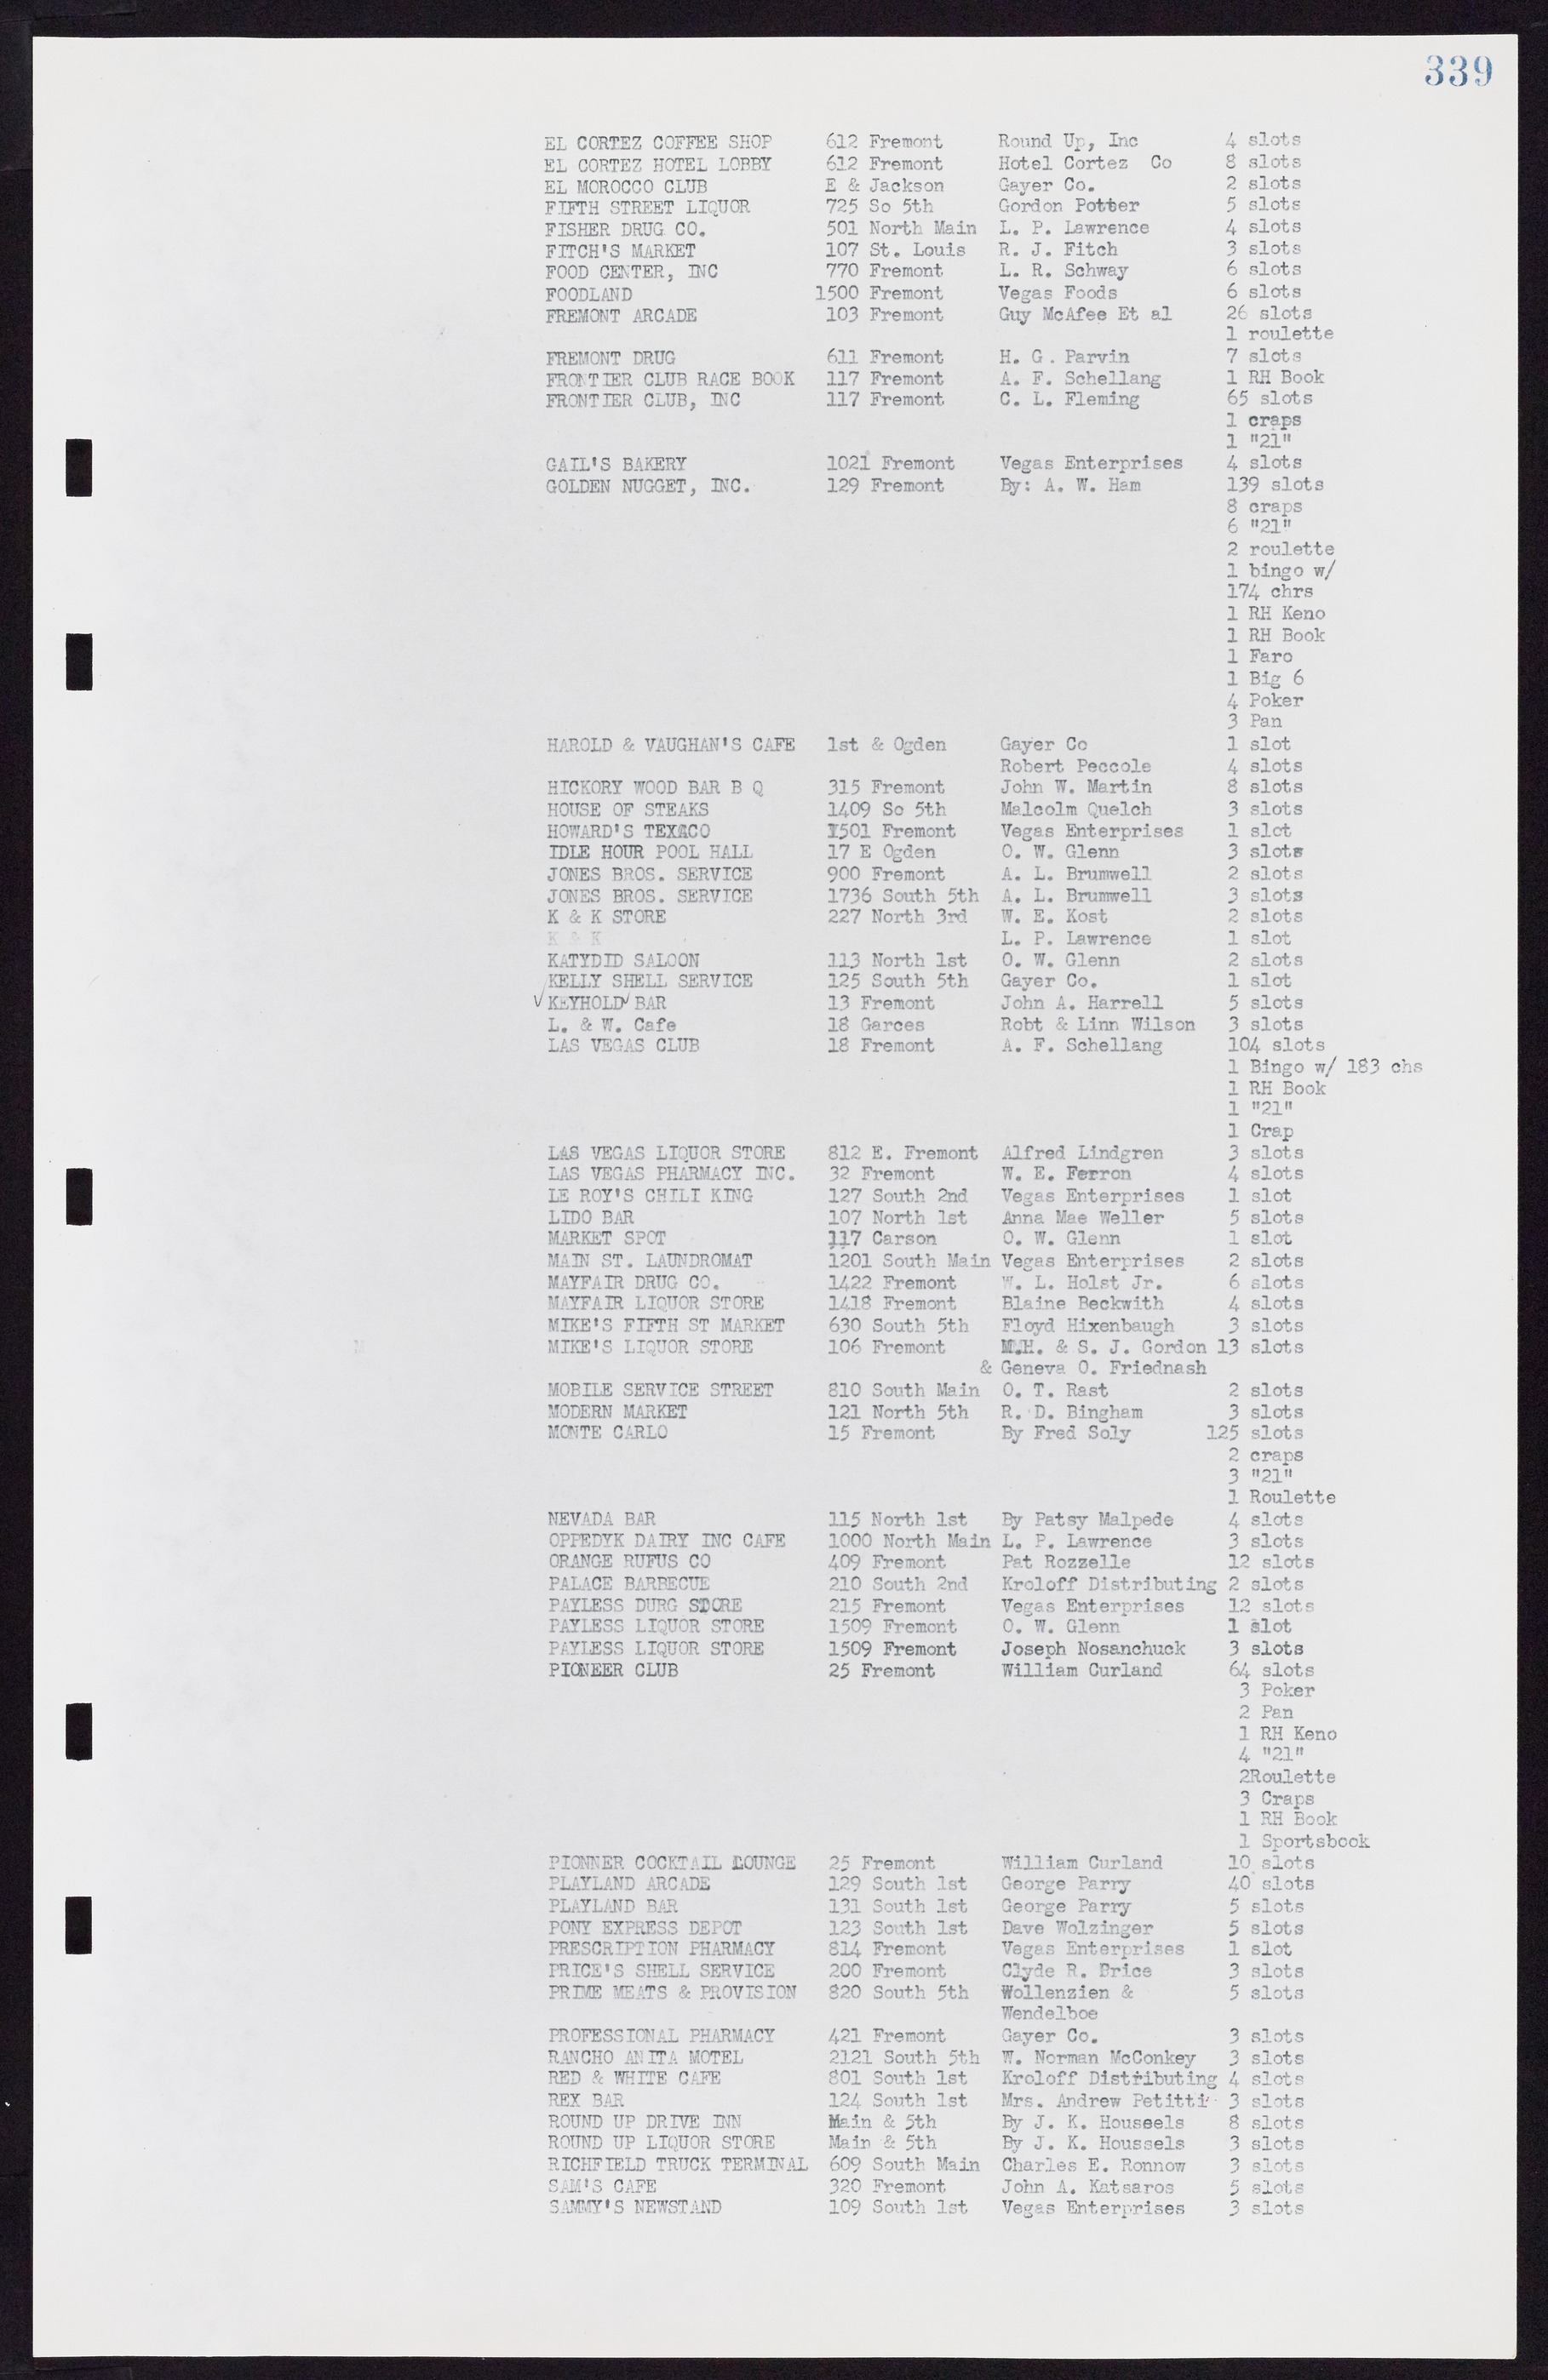 Las Vegas City Commission Minutes, November 7, 1949 to May 21, 1952, lvc000007-351